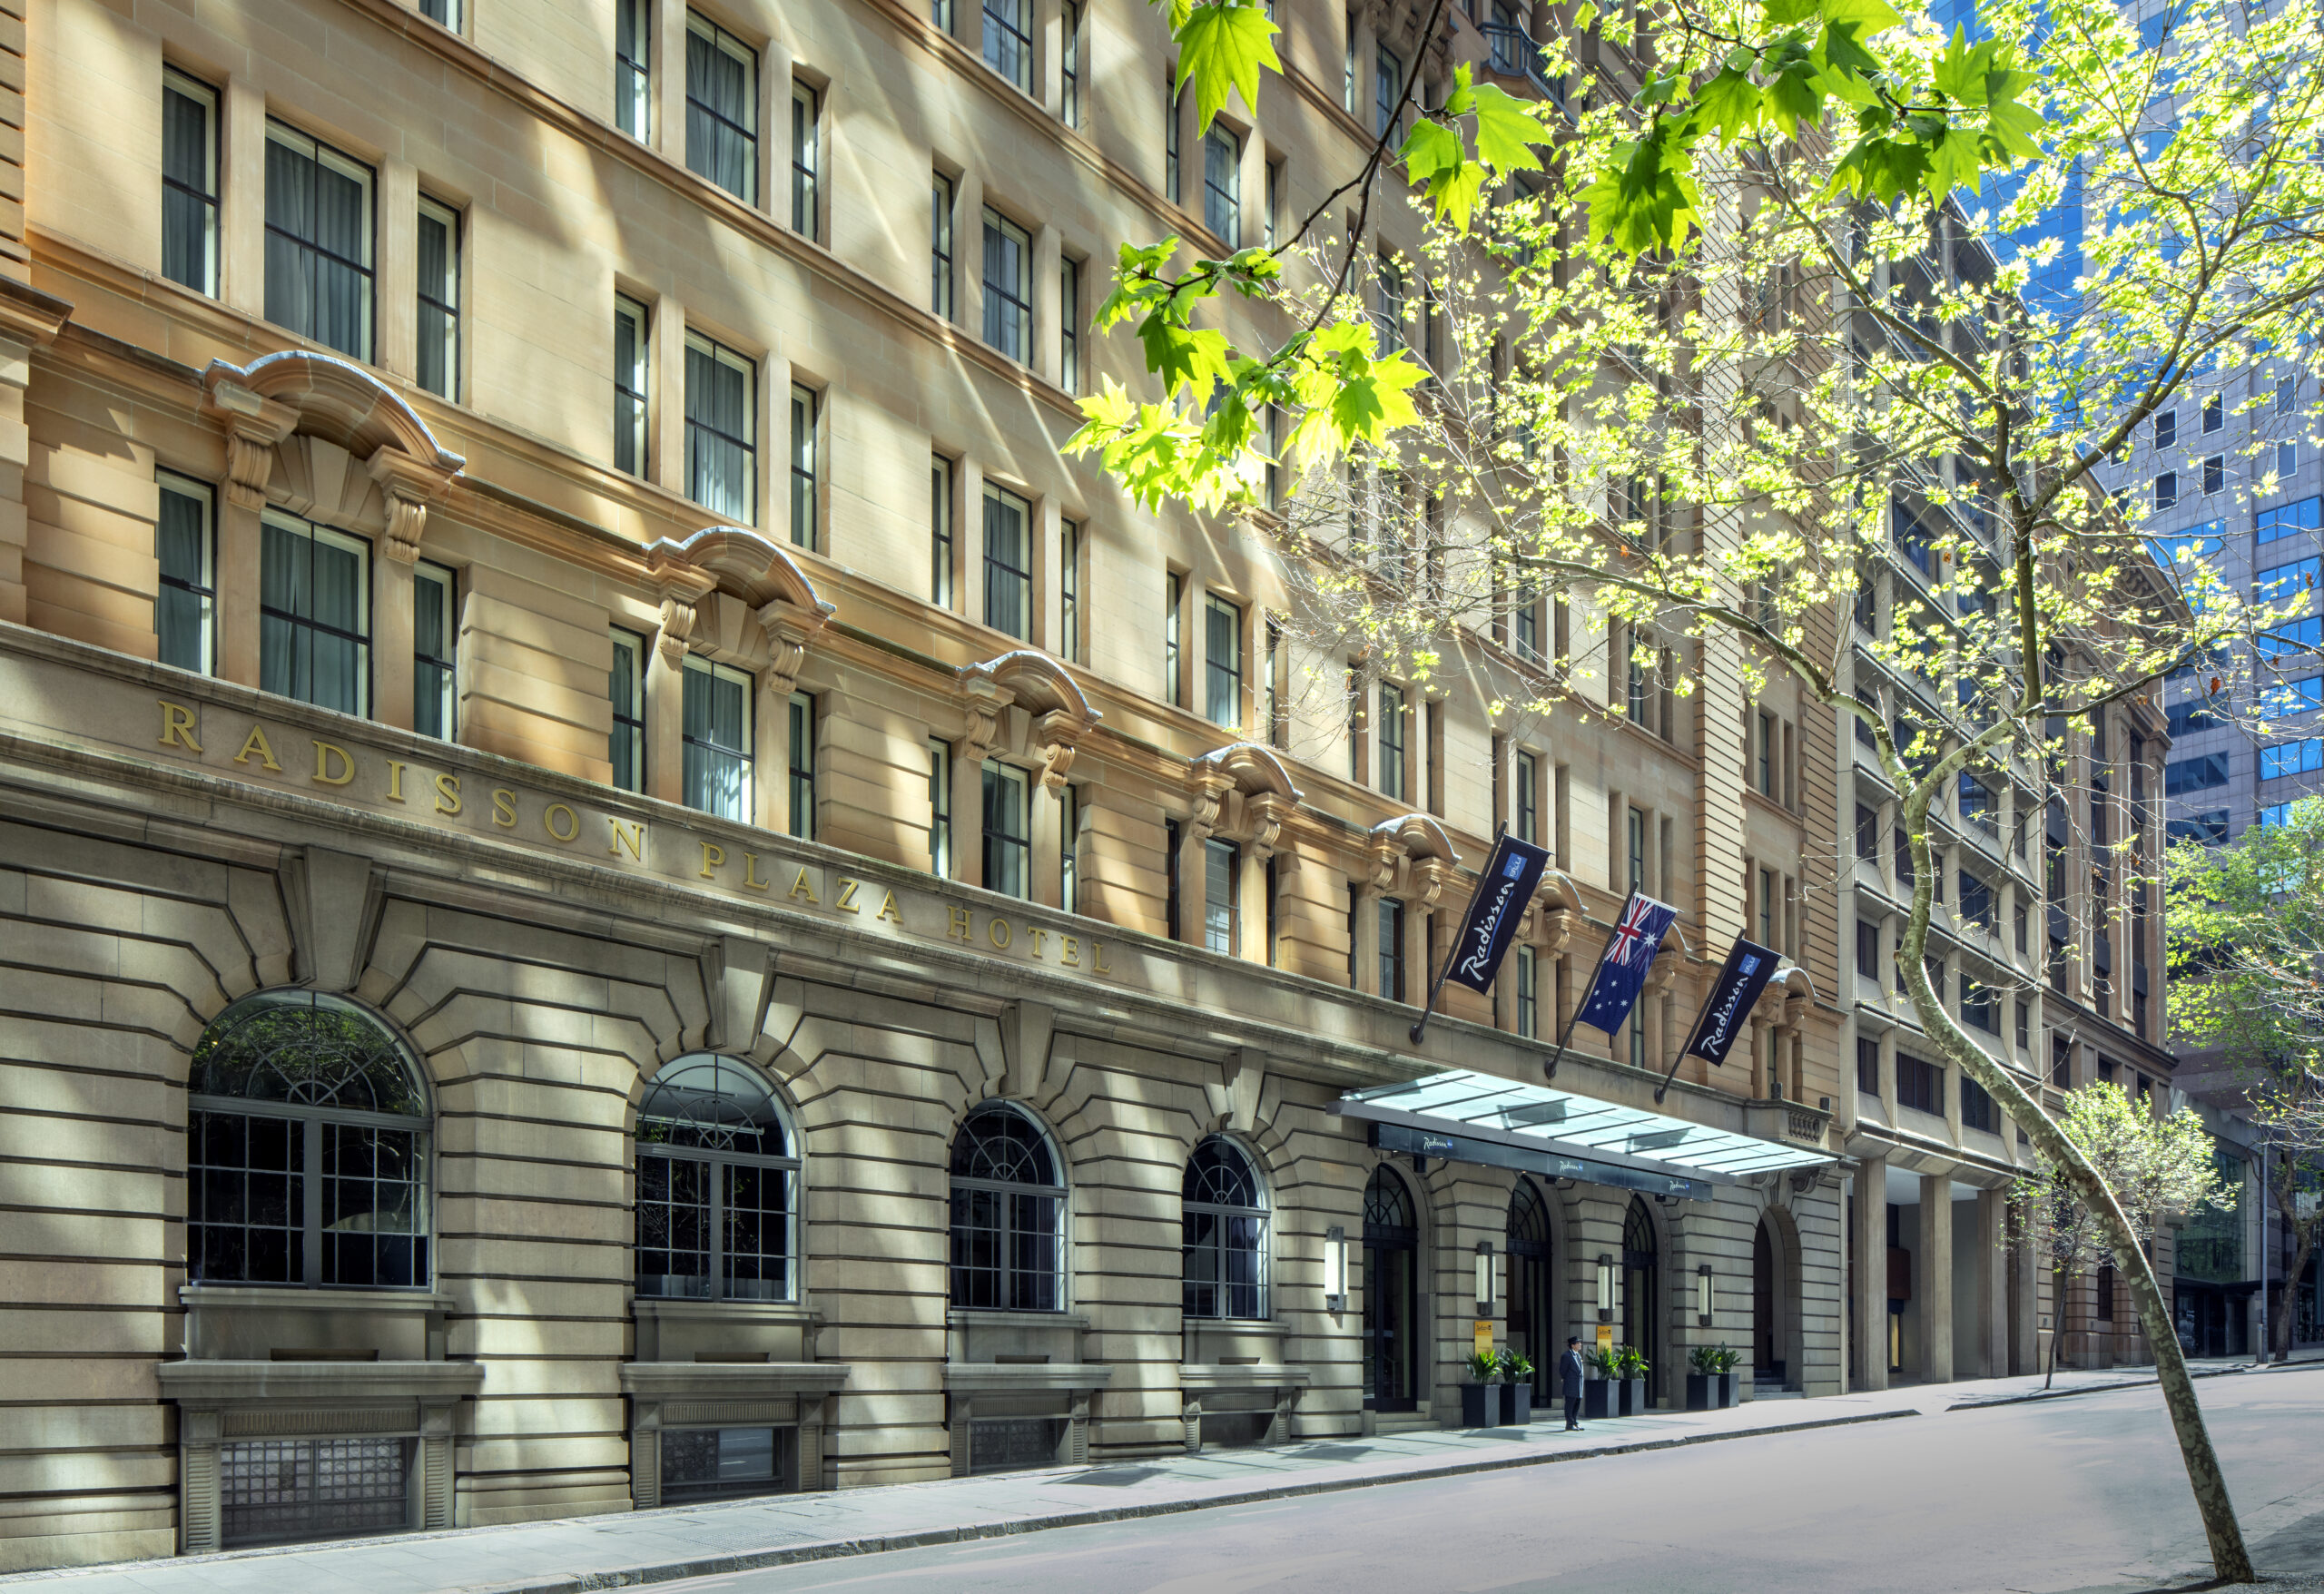 Radisson Blu Plaza Hotel Sydney Honours the History of an Iconic CBD Building